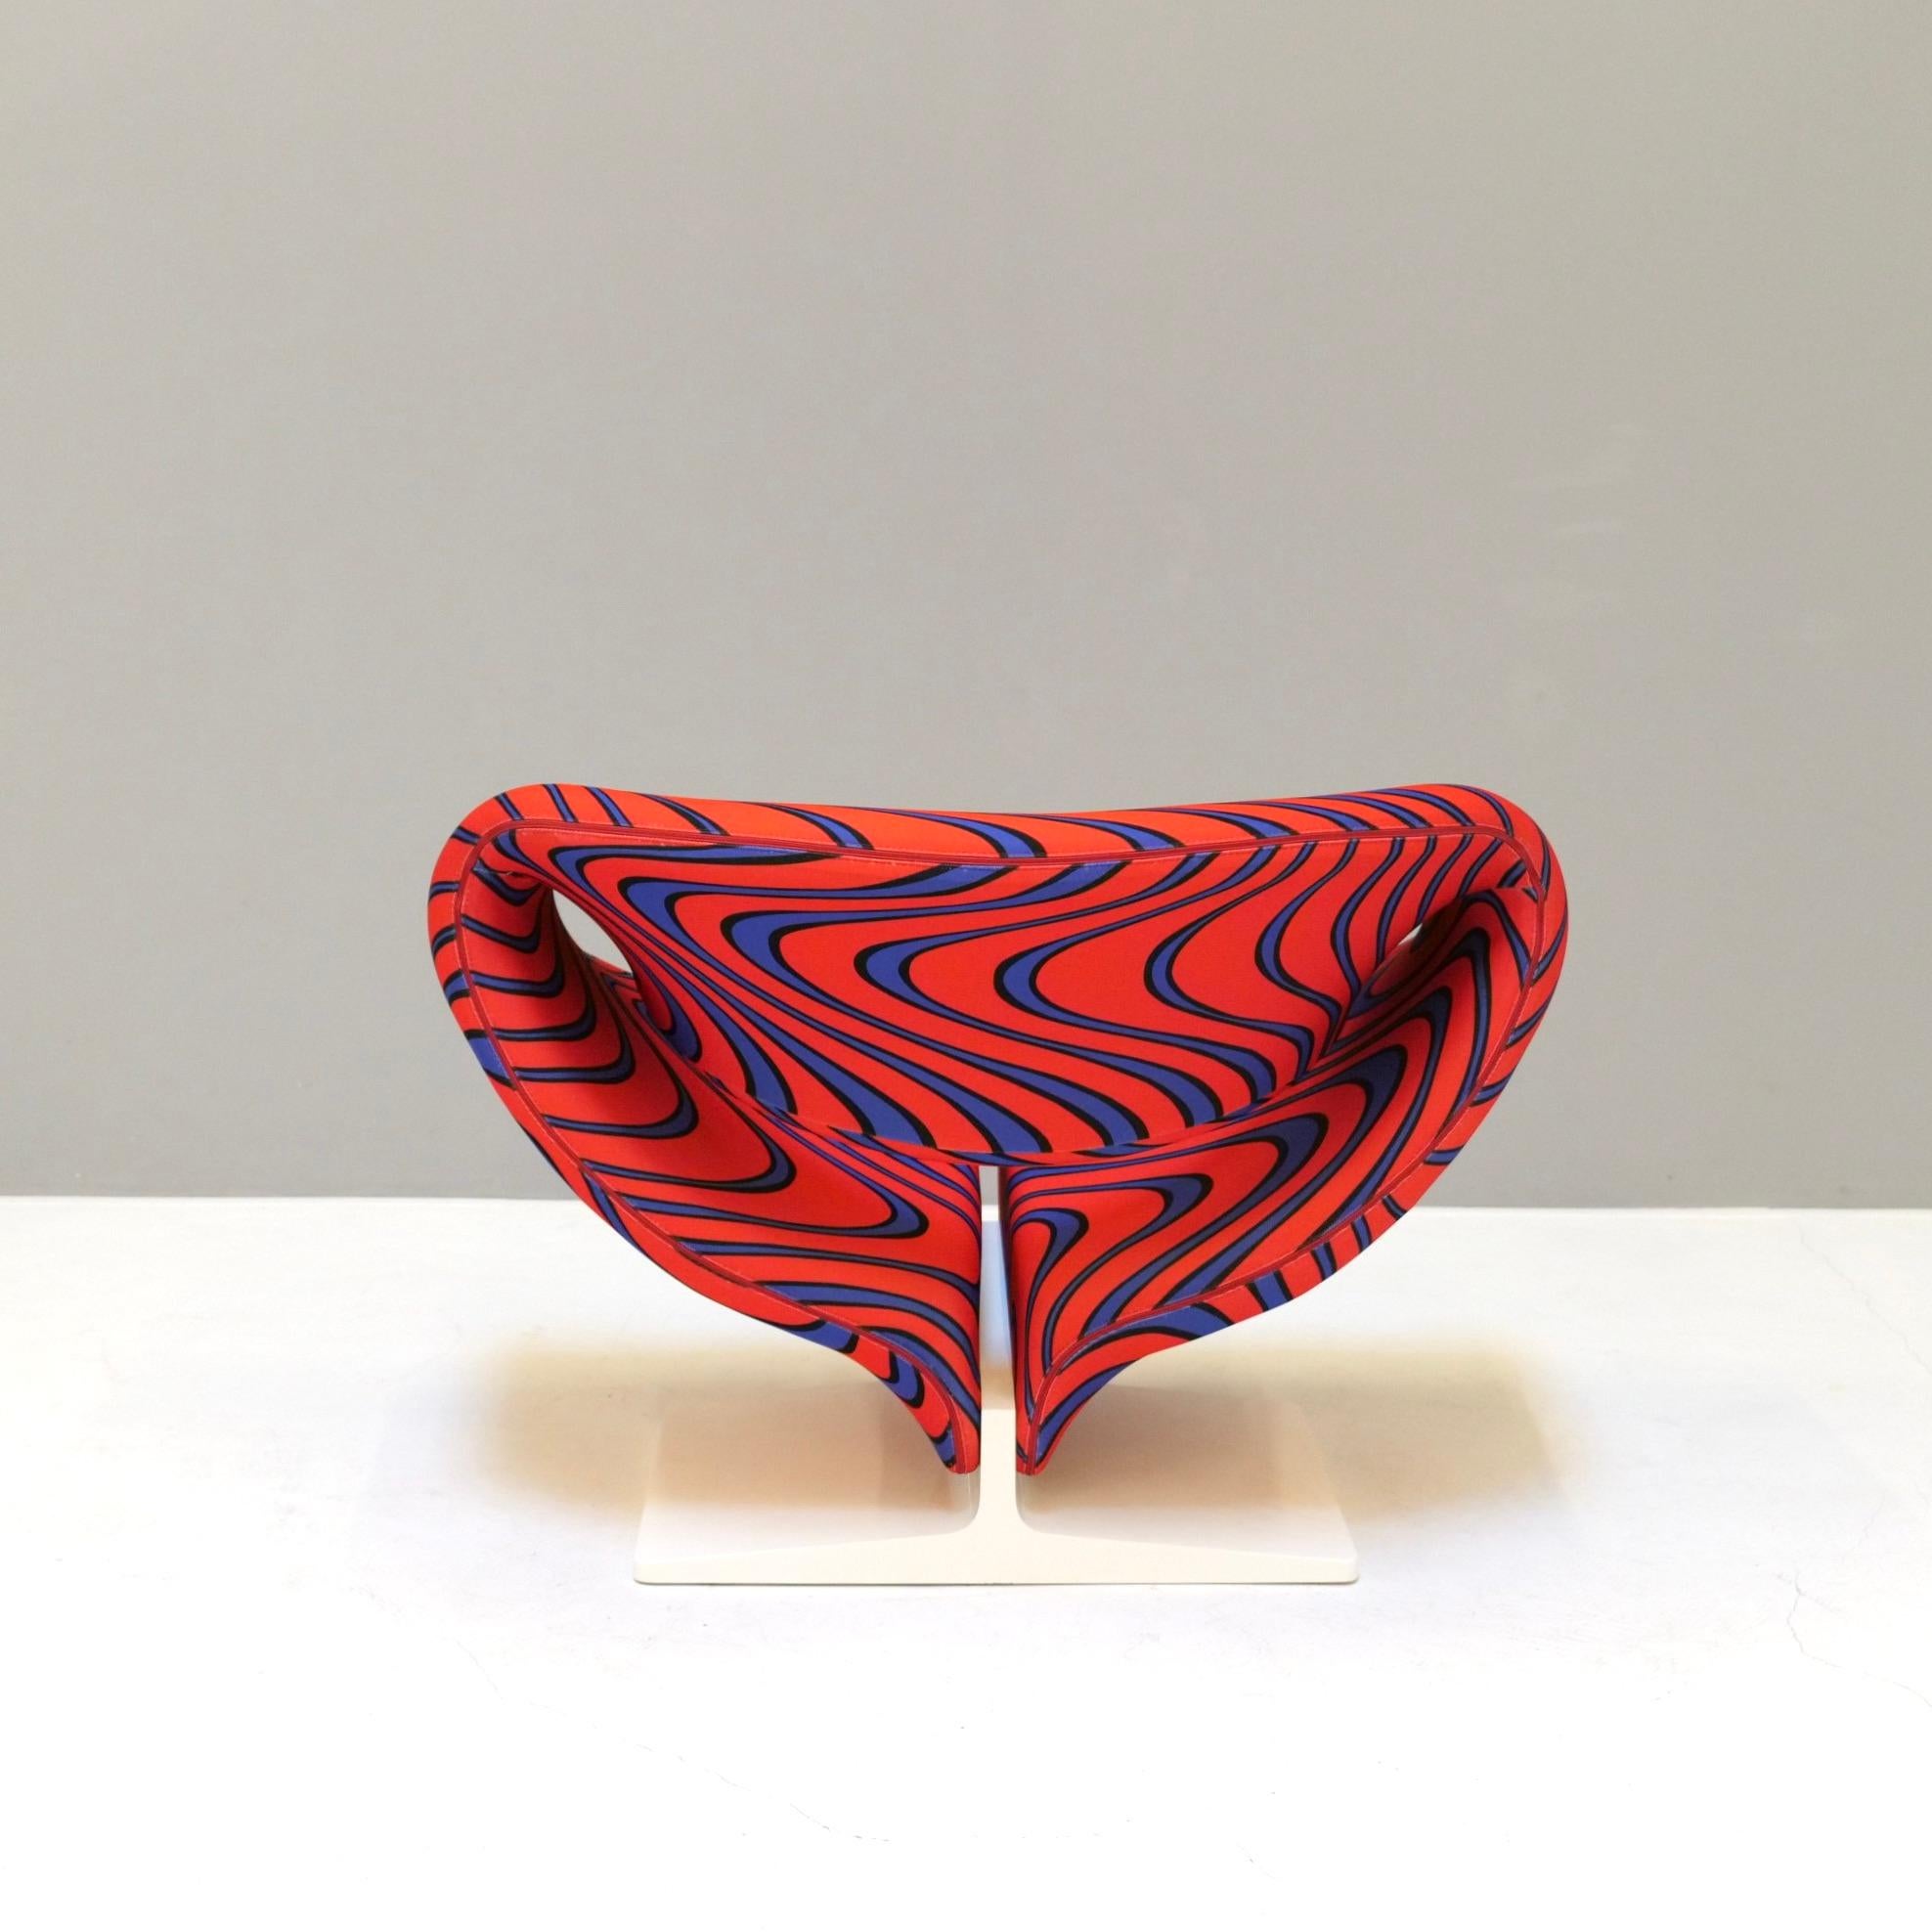 Ribbon Chair F582 by Pierre Paulin & Jack Lenor Larsen fabrics for Artifort For Sale 1